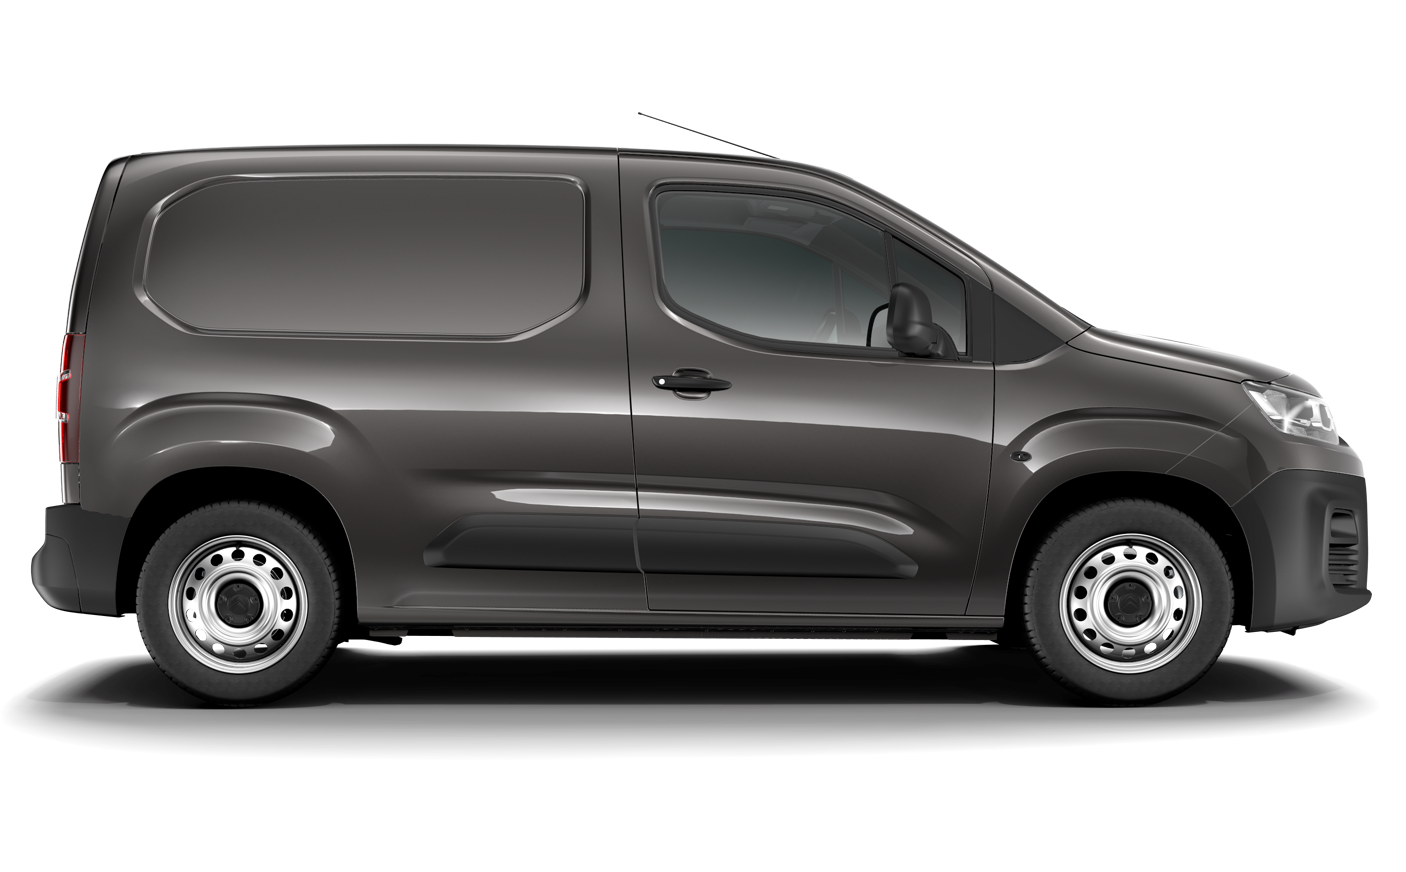 Citroën Berlingo Van, Singapore – Price 